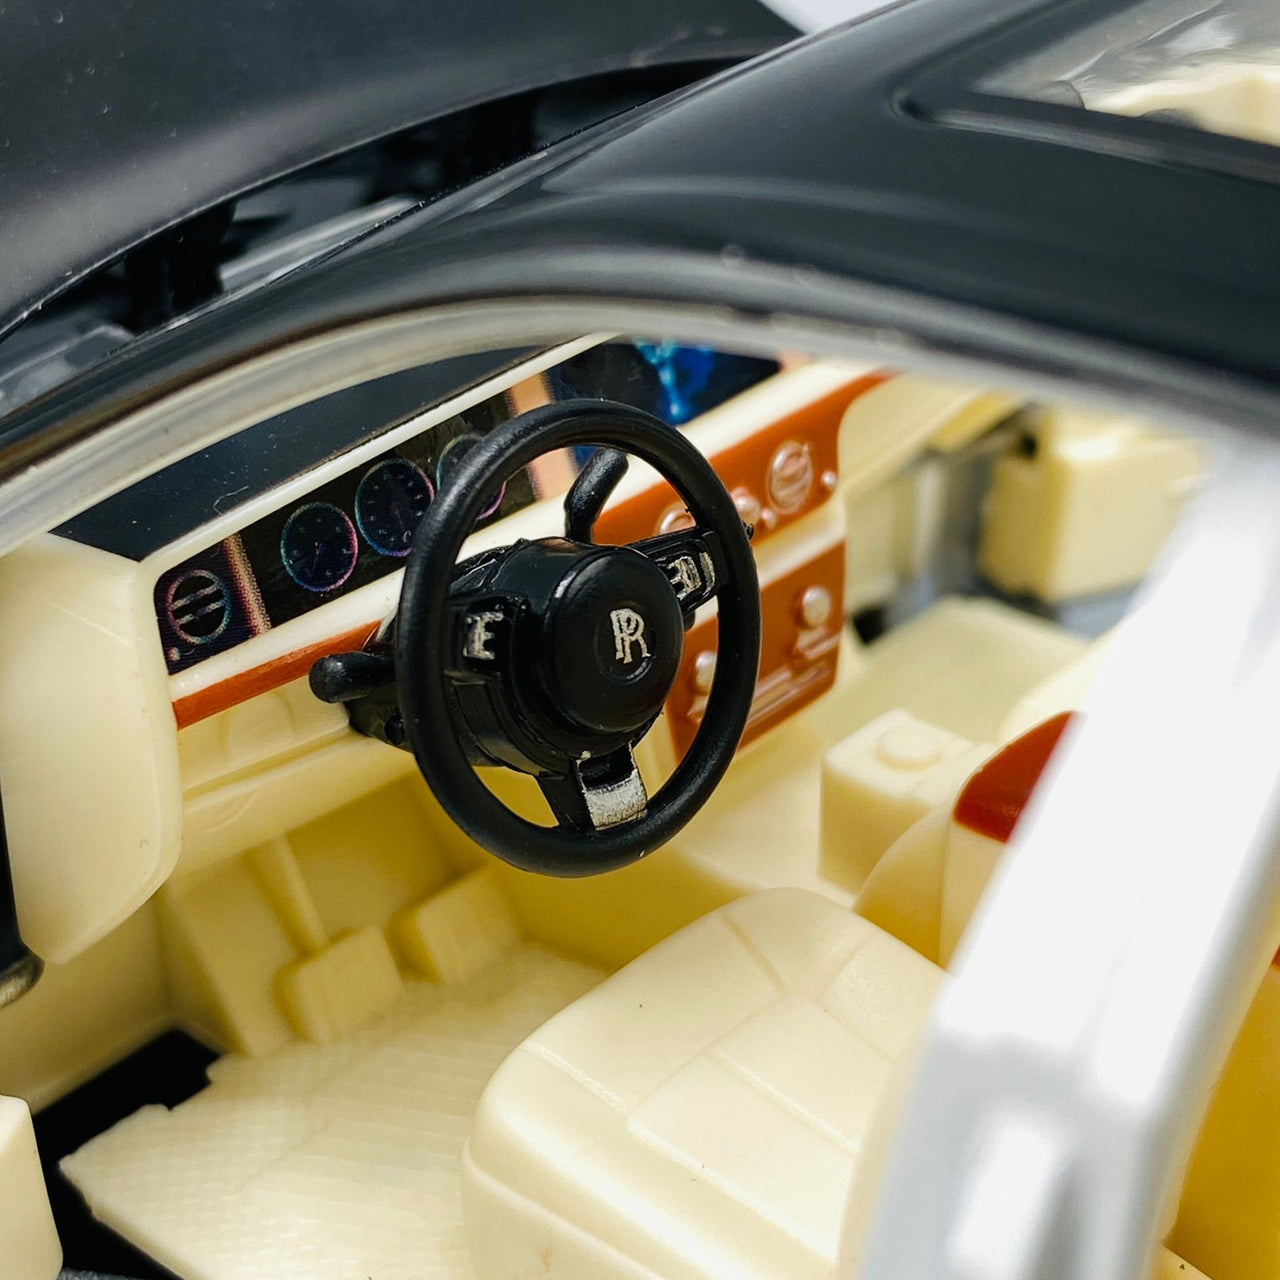 1:32 Roll-Royce Mansory Phantom Die-cast Car